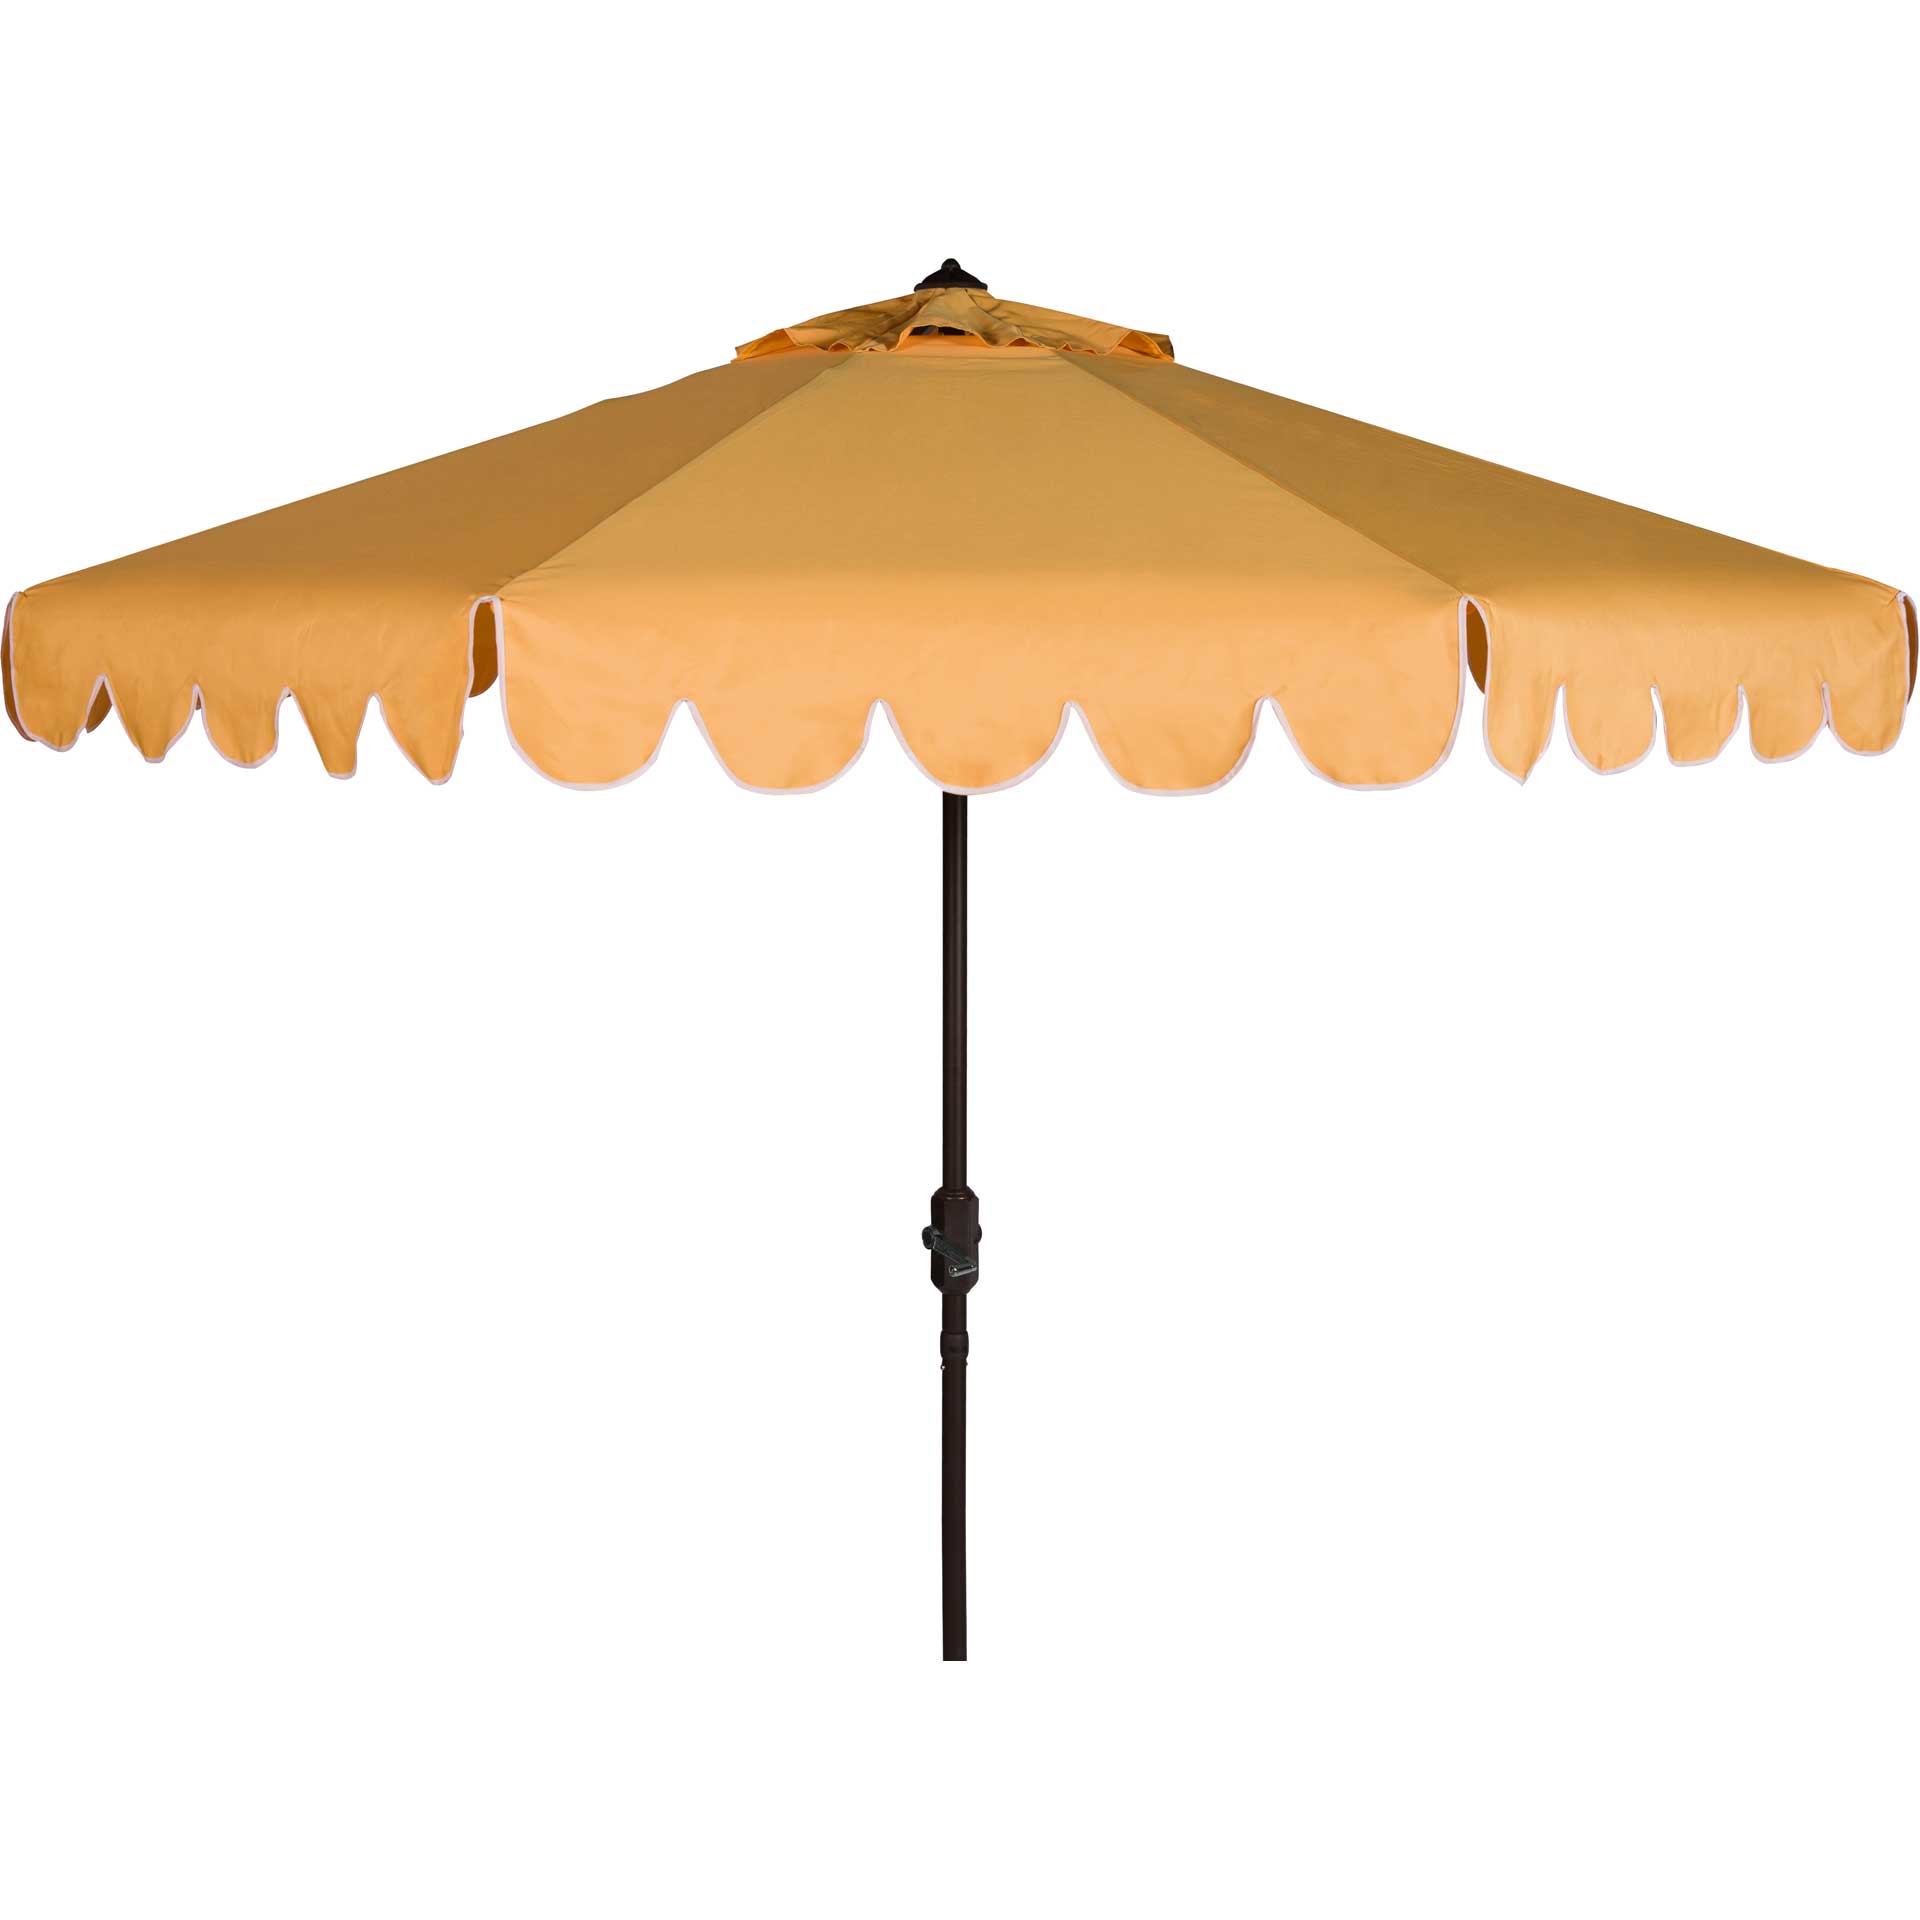 Vela Single Scallop Push Button Tilt Umbrella Yellow/White